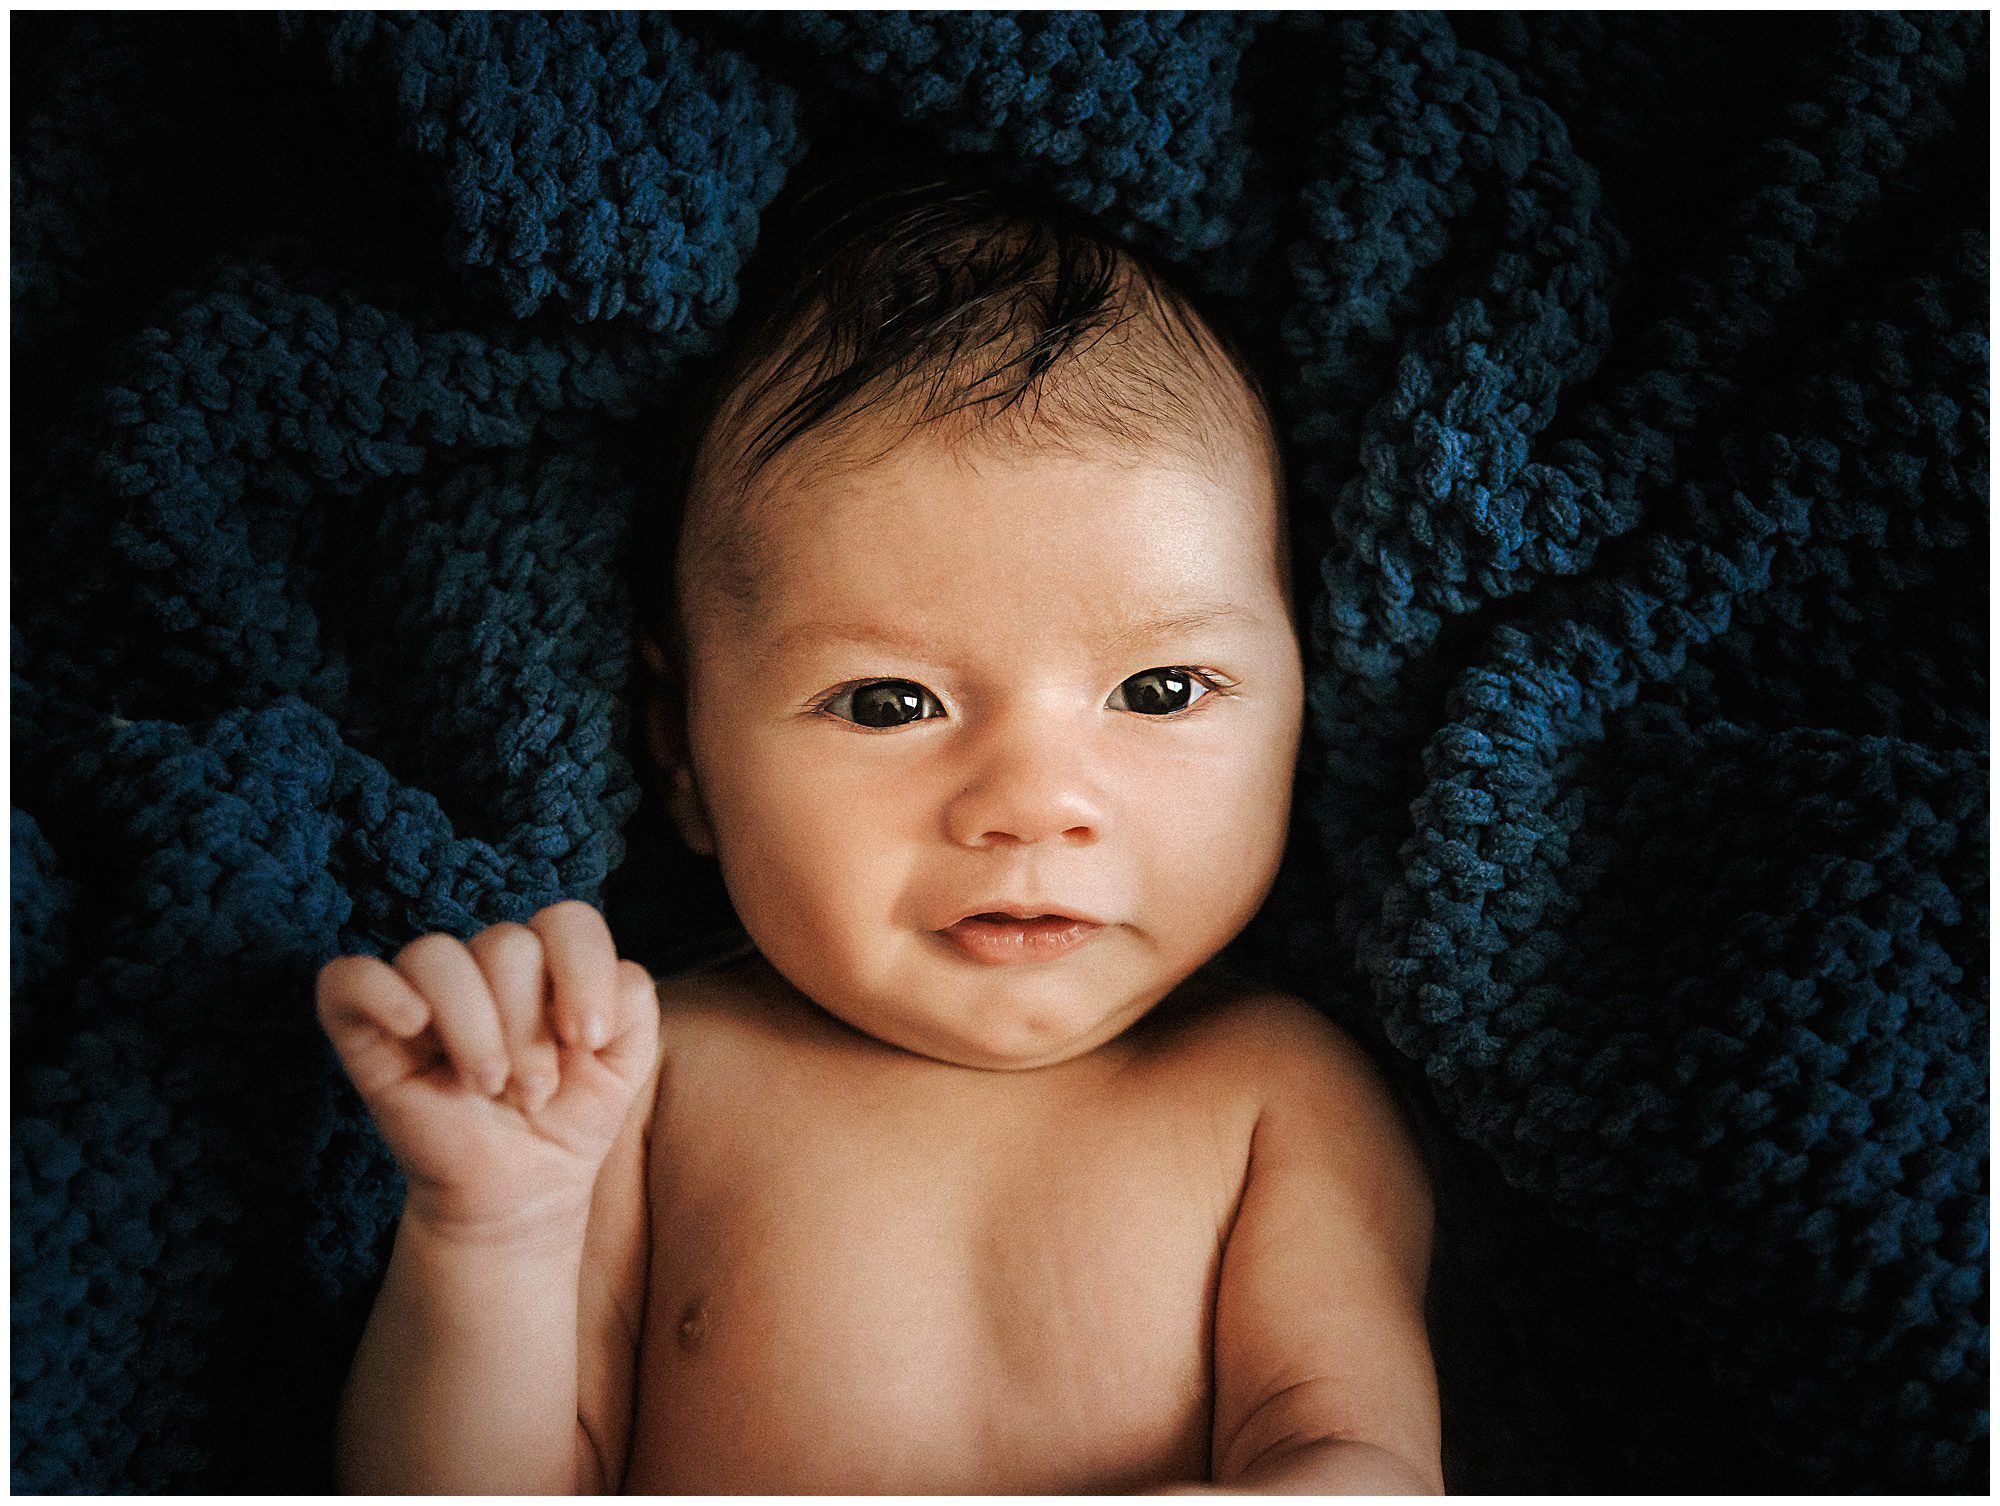 Portrait of newborn baby boy smiling, laying in dark blue knit blanket